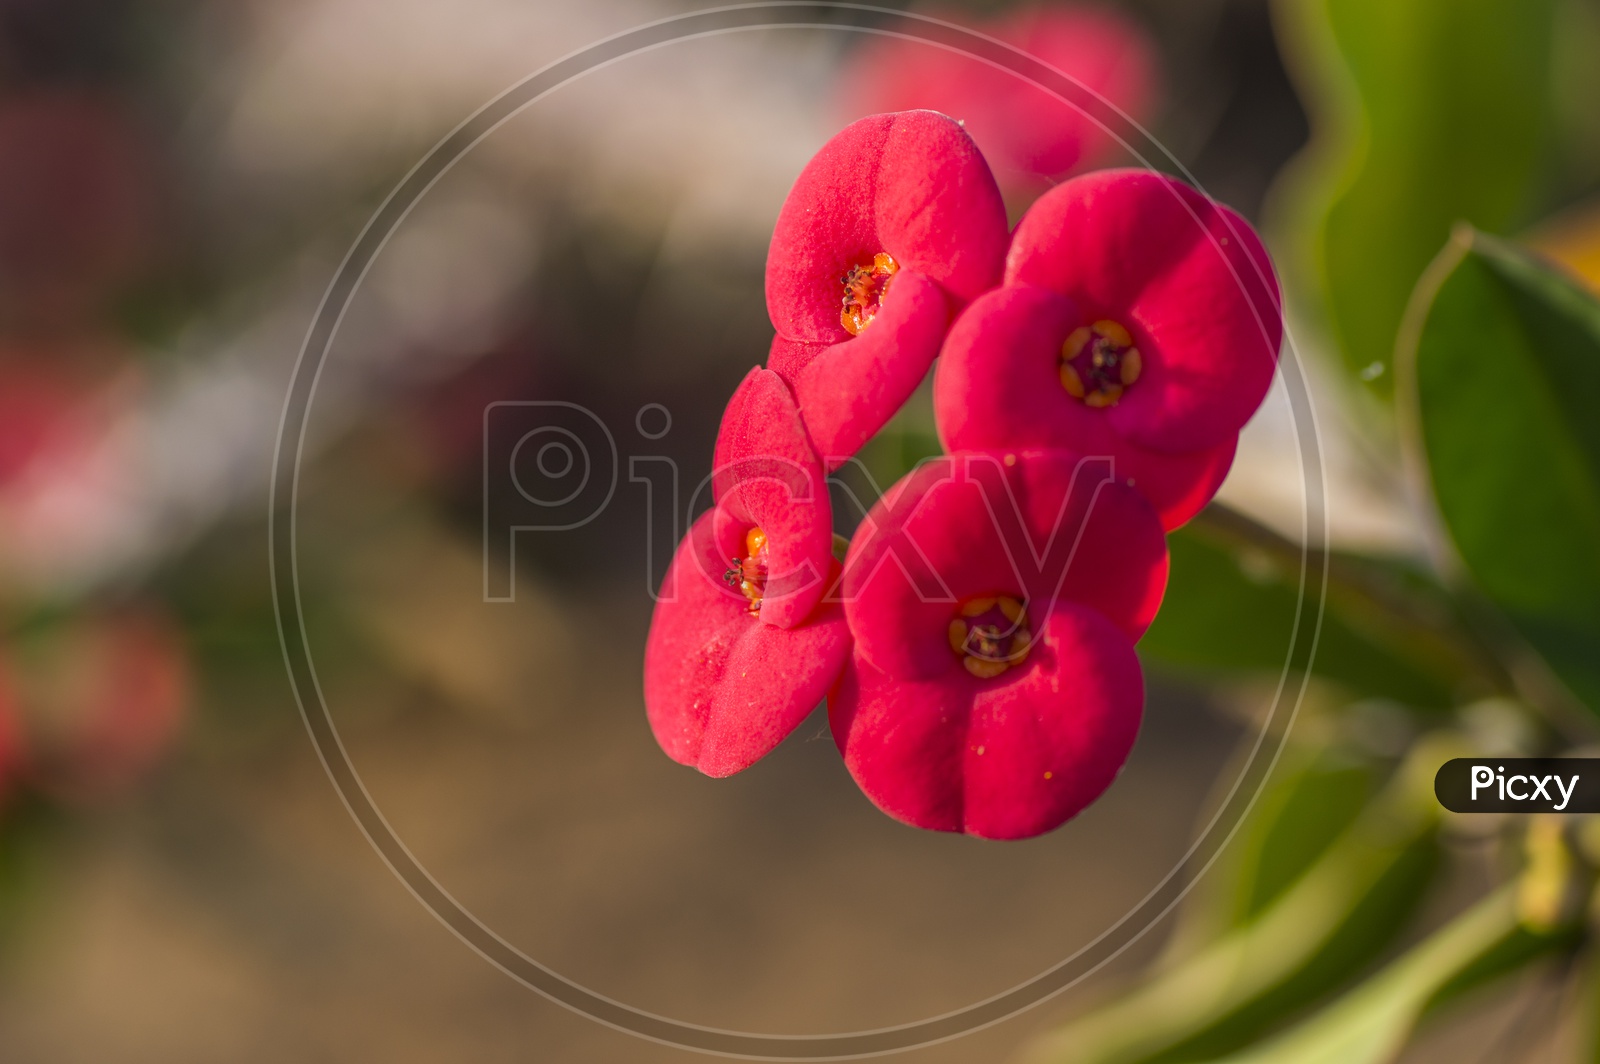 Euphorbia Milli Flower or Red Cactus Flower  Blooming In the Garden